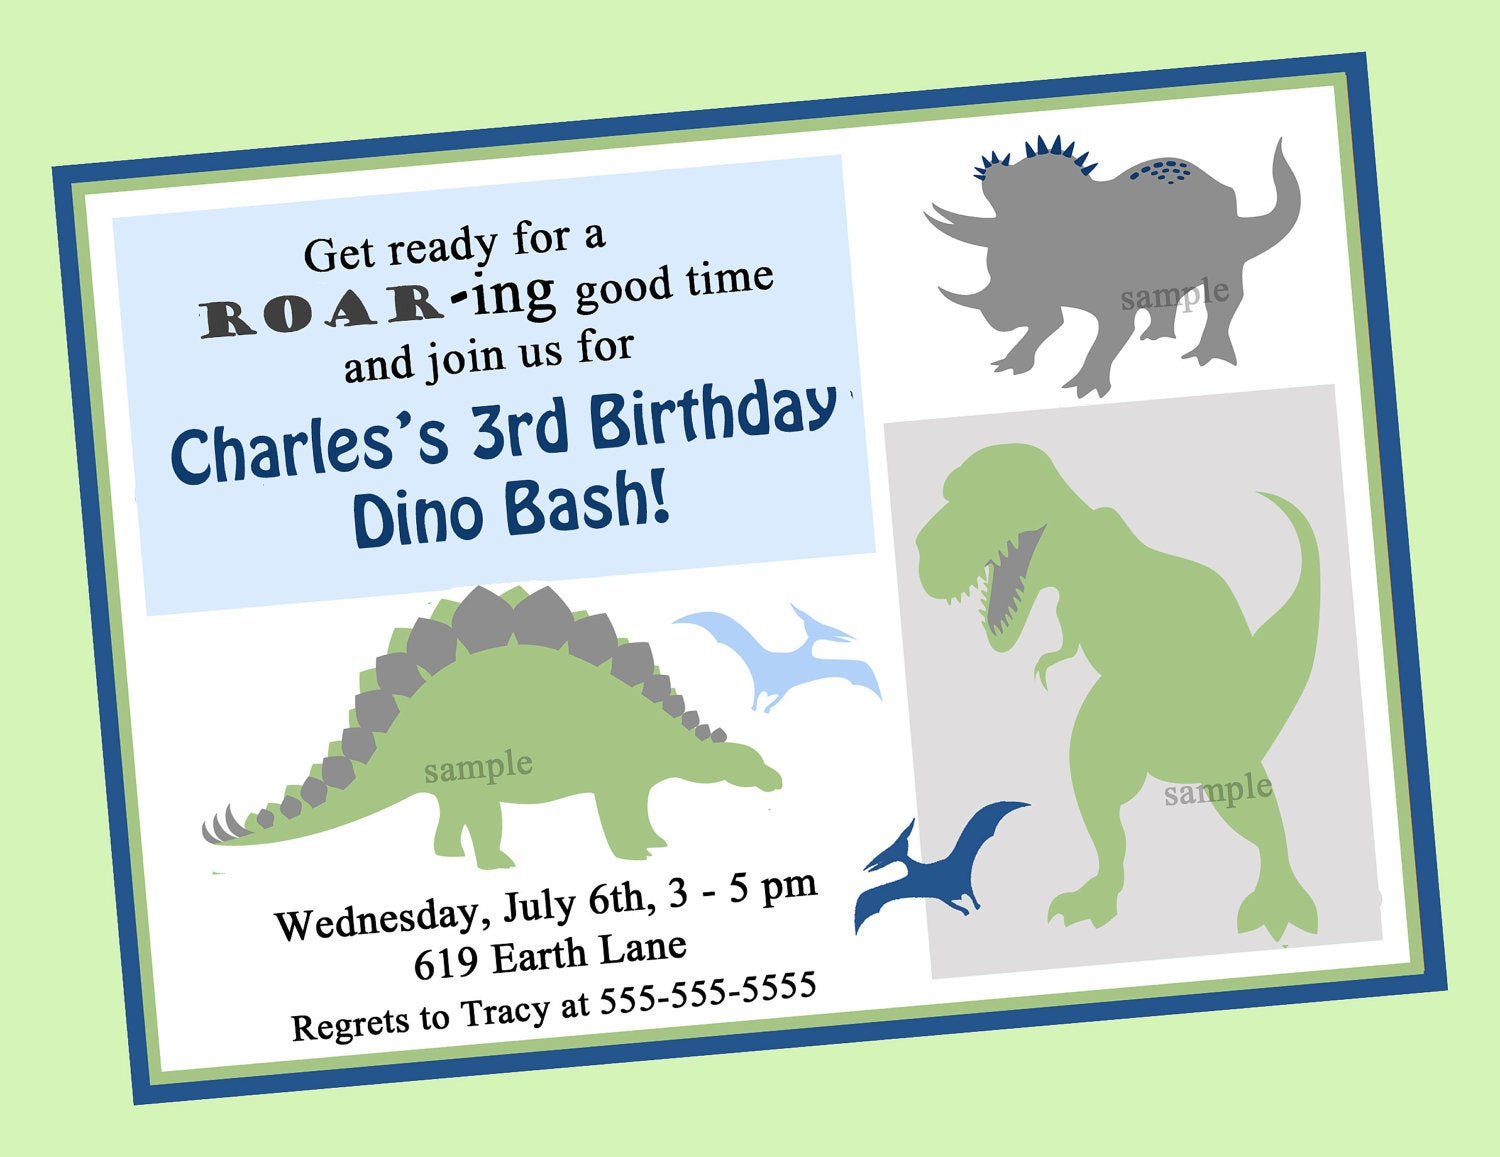 Free Printable Dinosaur Birthday Invitations
 Dinosaur Birthday Invitation Printable or Printed with FREE